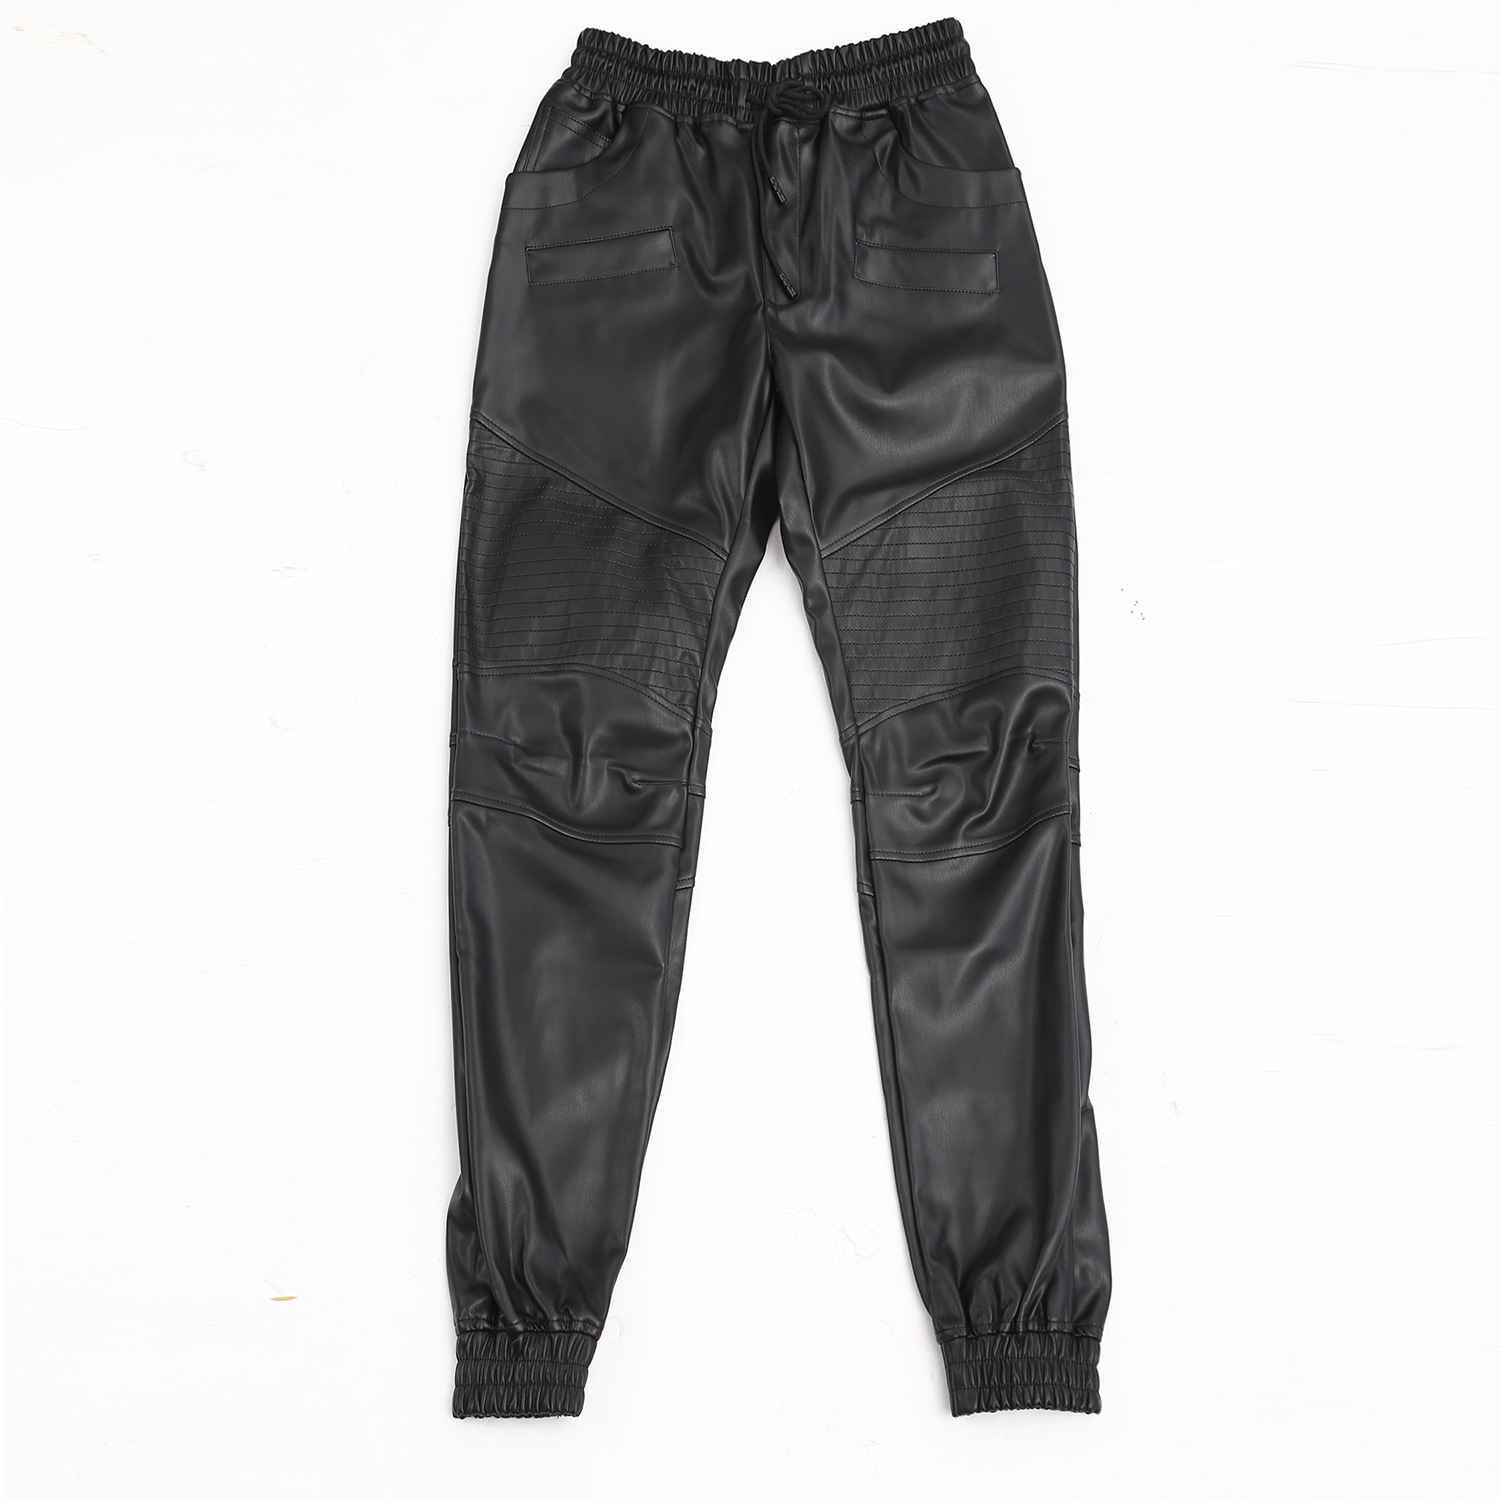 Men's Fashion Slim Riding Leather Pants